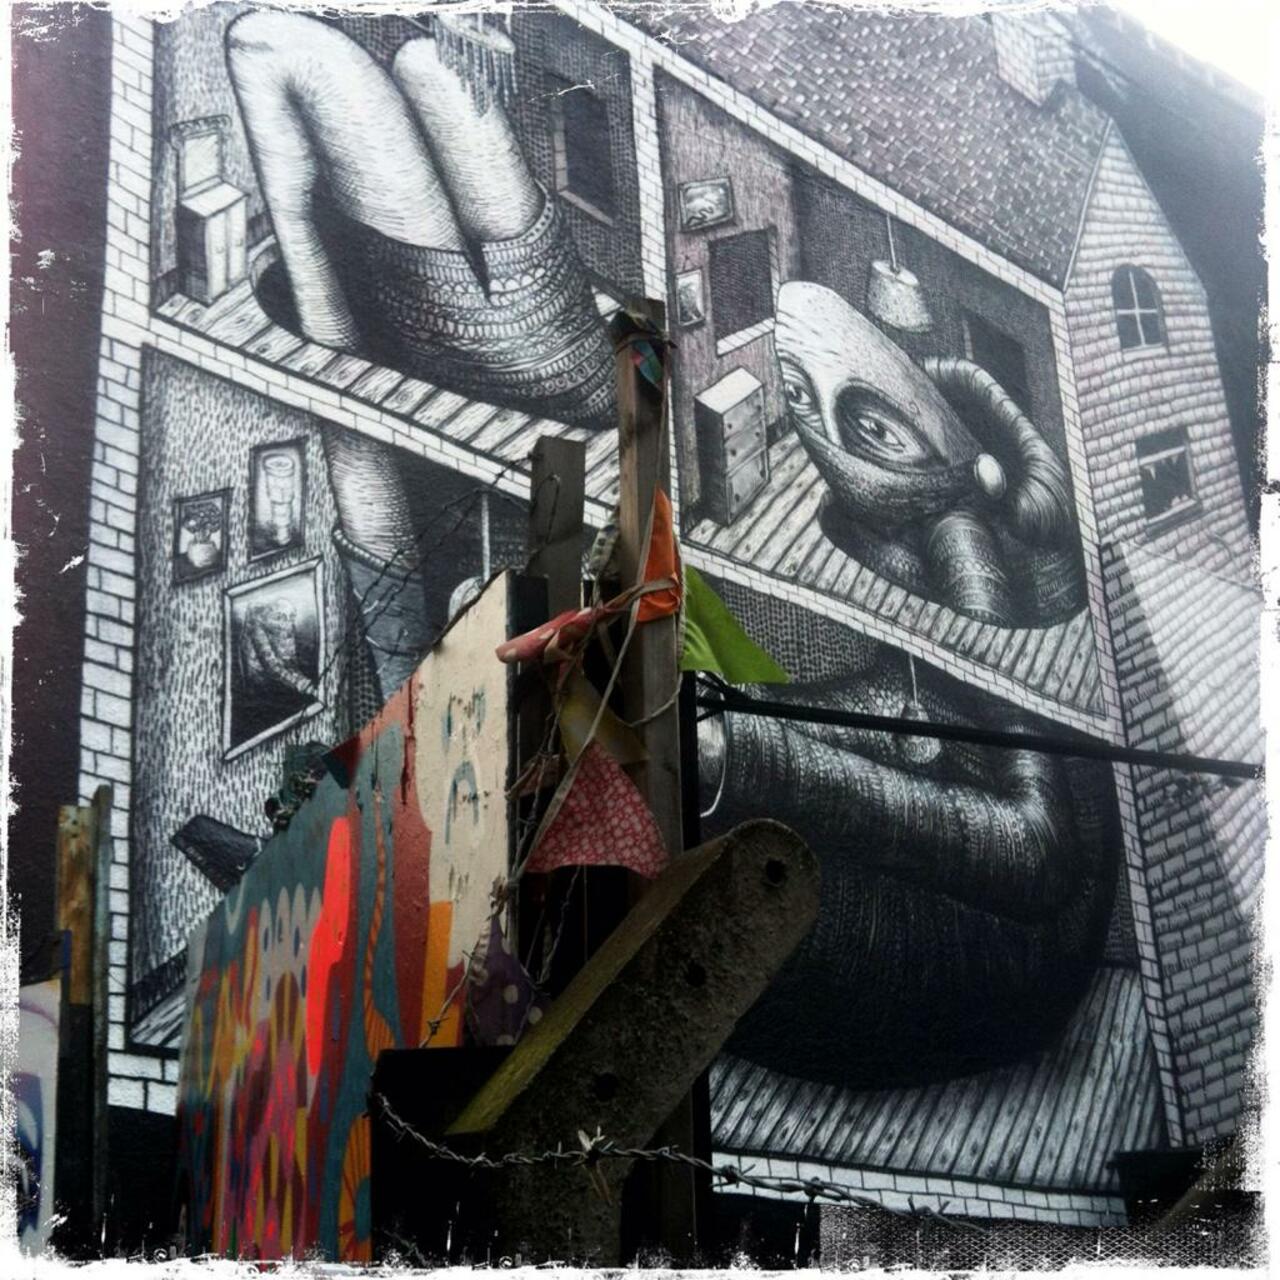 Stunning mural by #Phlegm on Rivington Street #art #streetart #graffiti @GoogleStreetArt @ShoreditchHype http://t.co/Qn3cmwkF6l